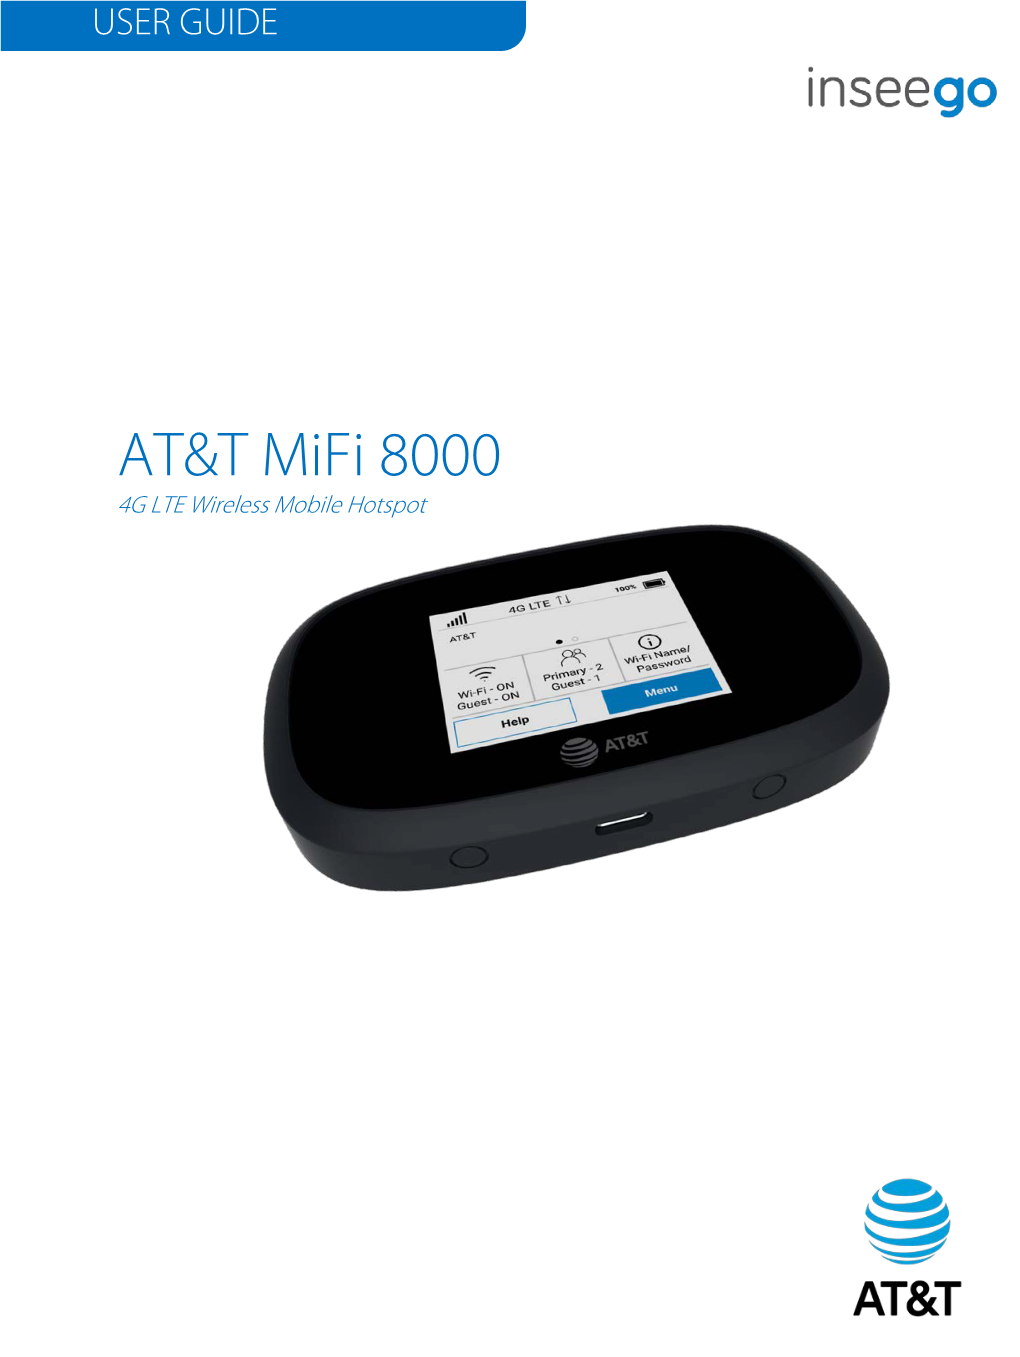 AT&T Mifi 8000 User Guide